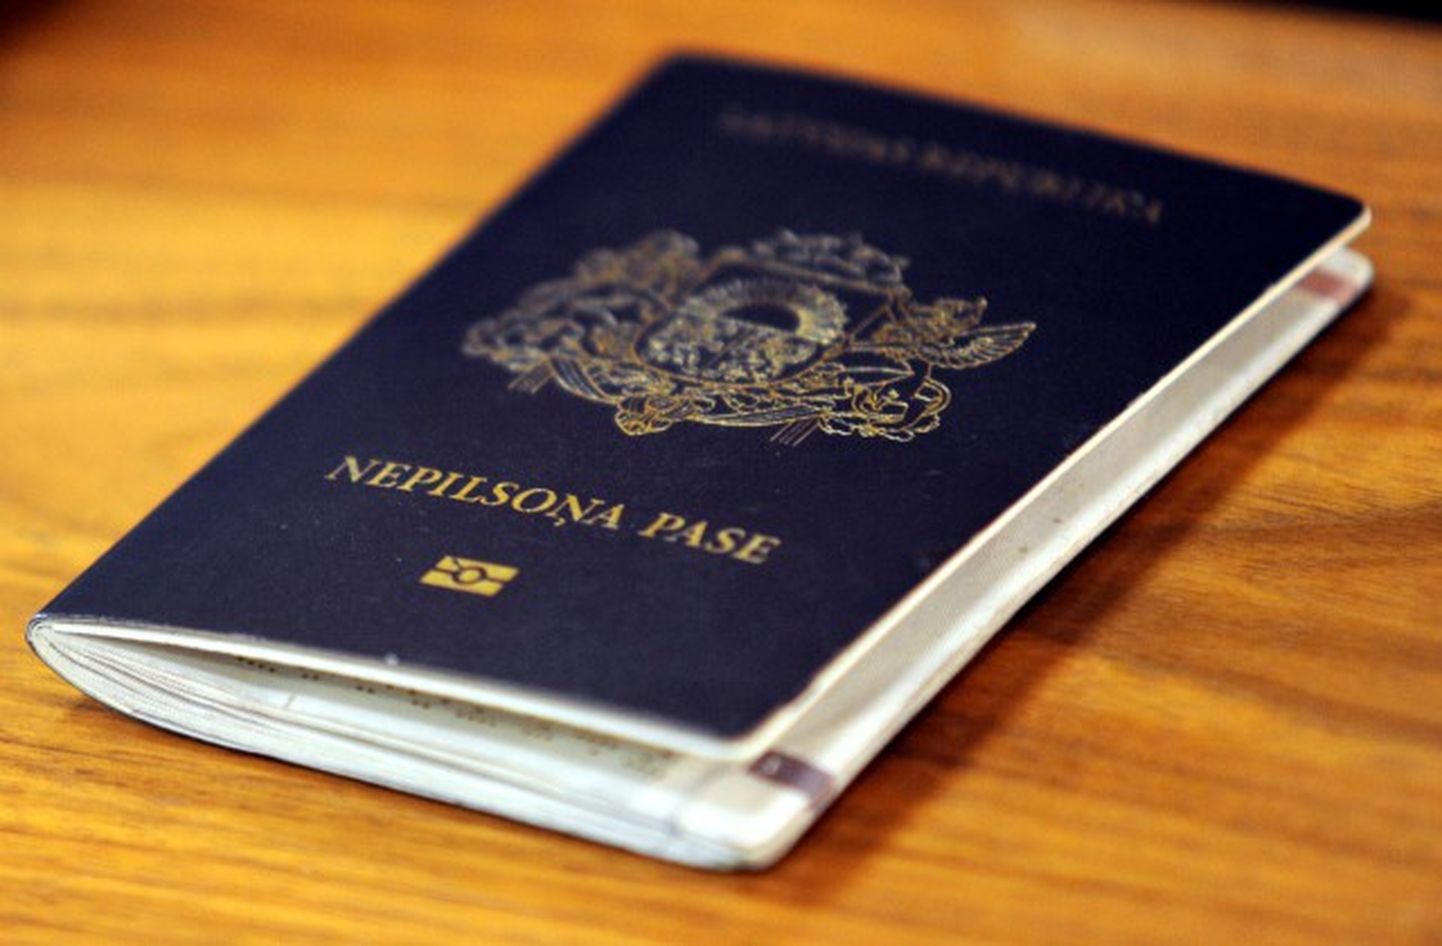 Паспорт негражданина